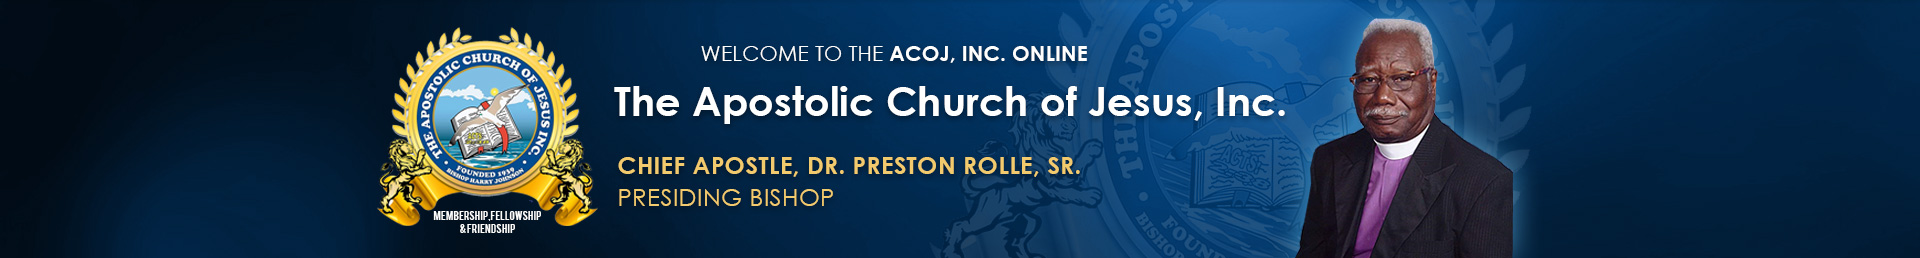 The Apostolic Church of Jesus, Inc.